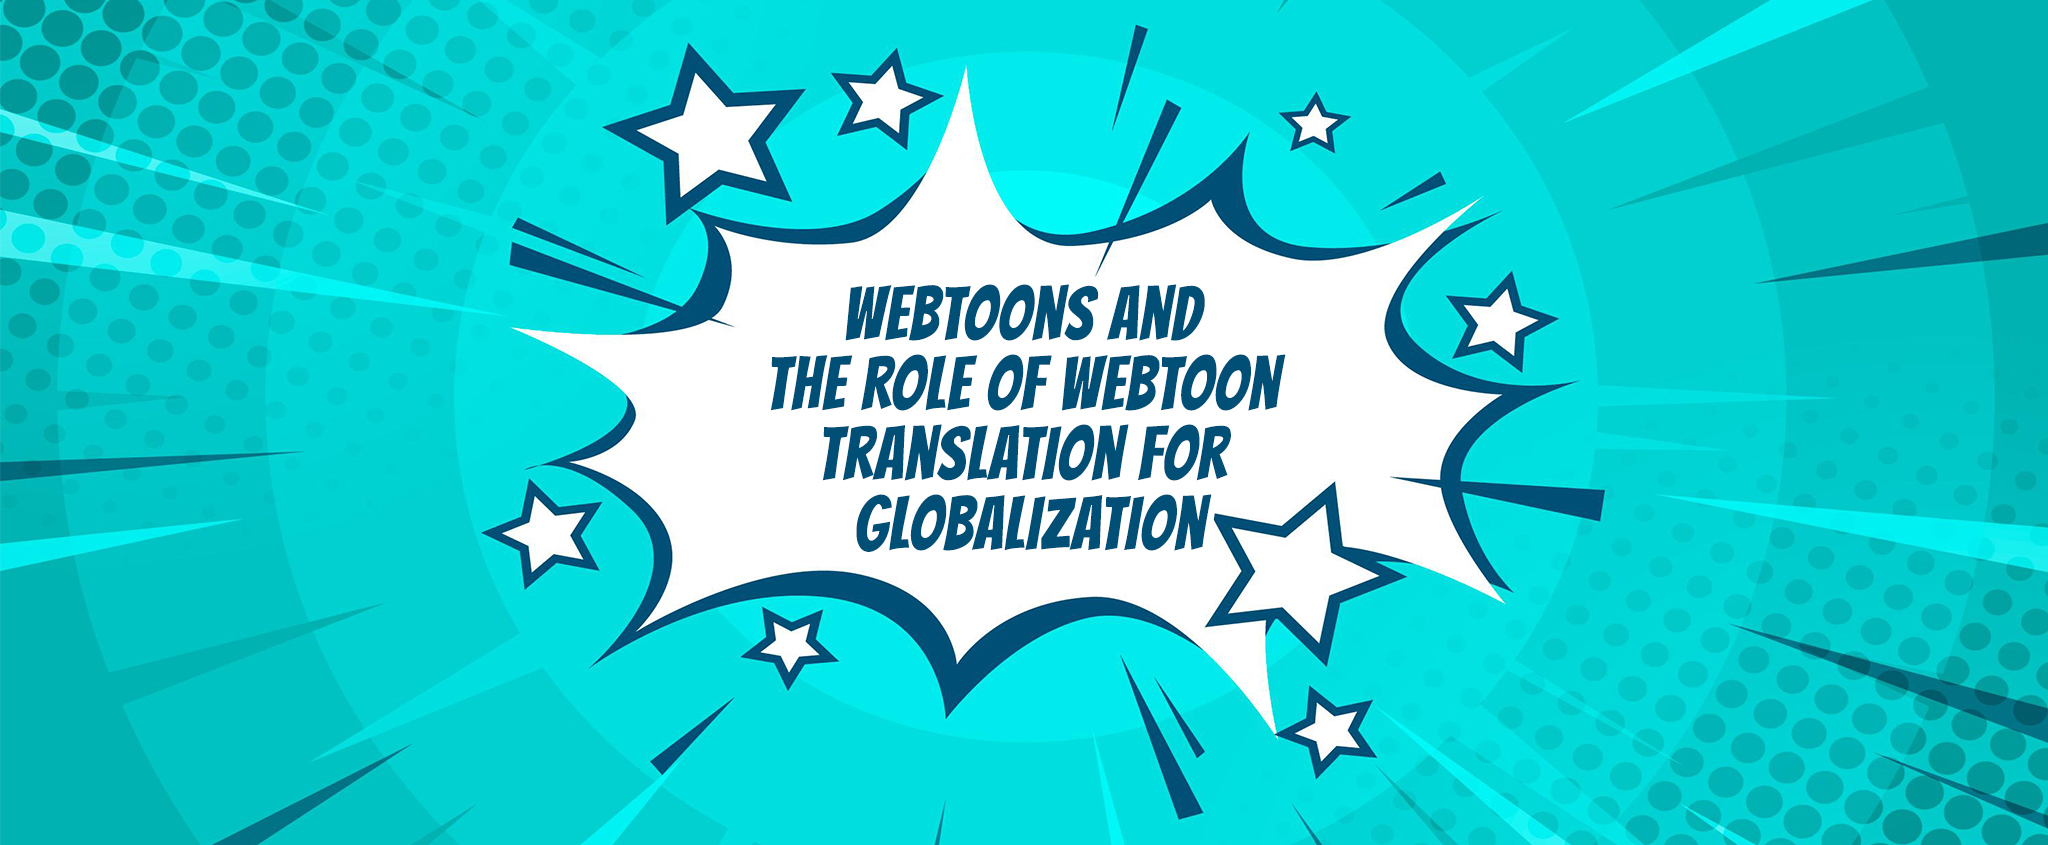 Webtoons and the Role of Webtoon Translation for Globalization